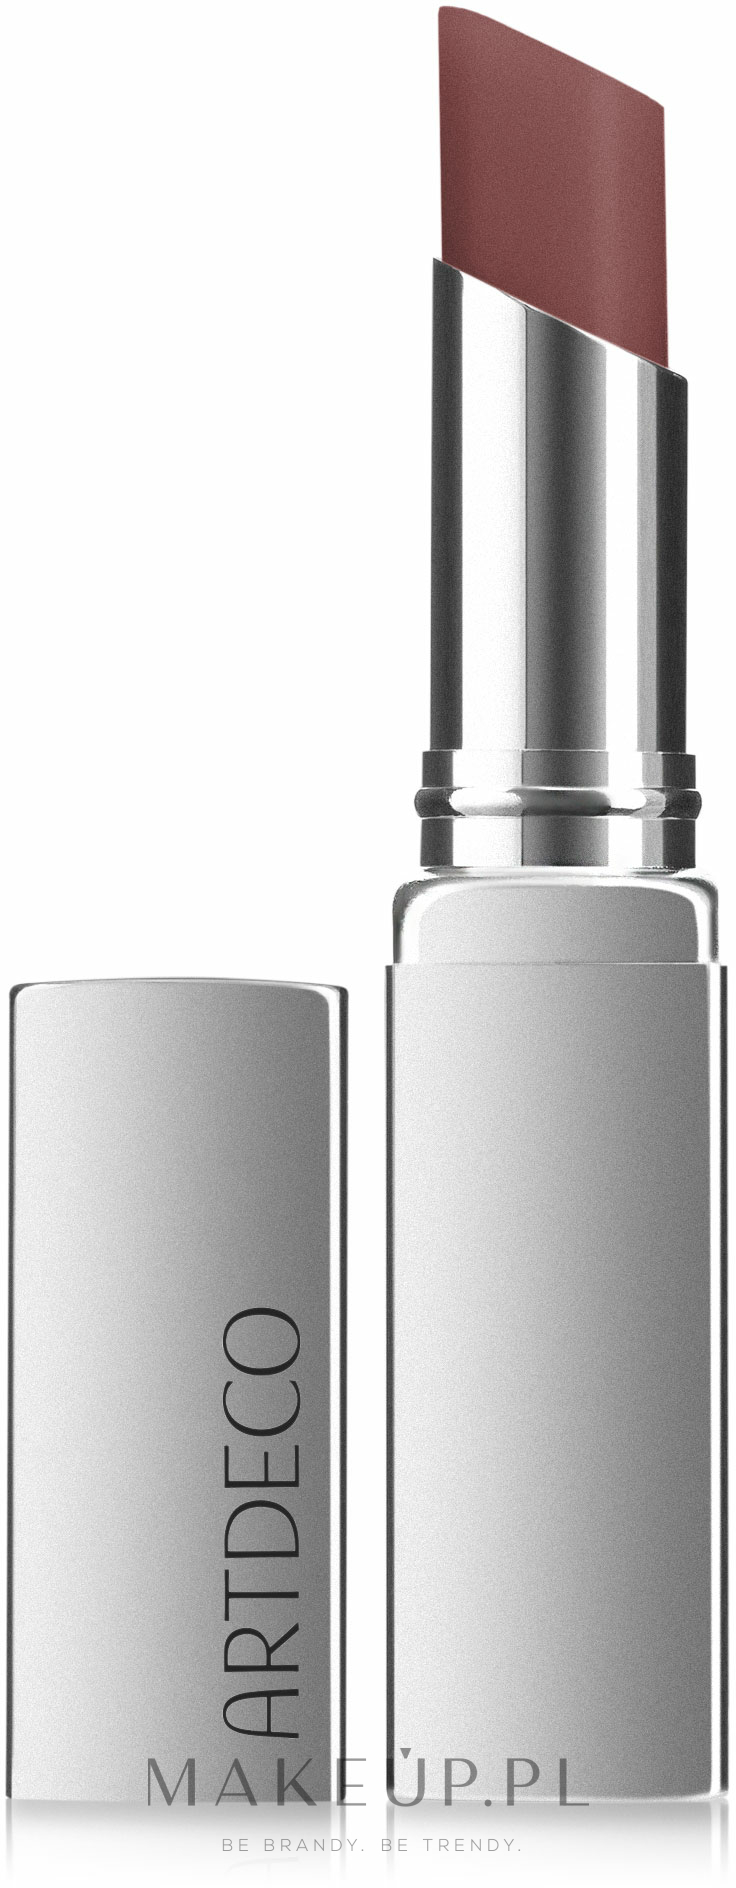 Balsam-booster do ust - Artdeco Color Booster Lip Balm — Zdjęcie 08 - Nude